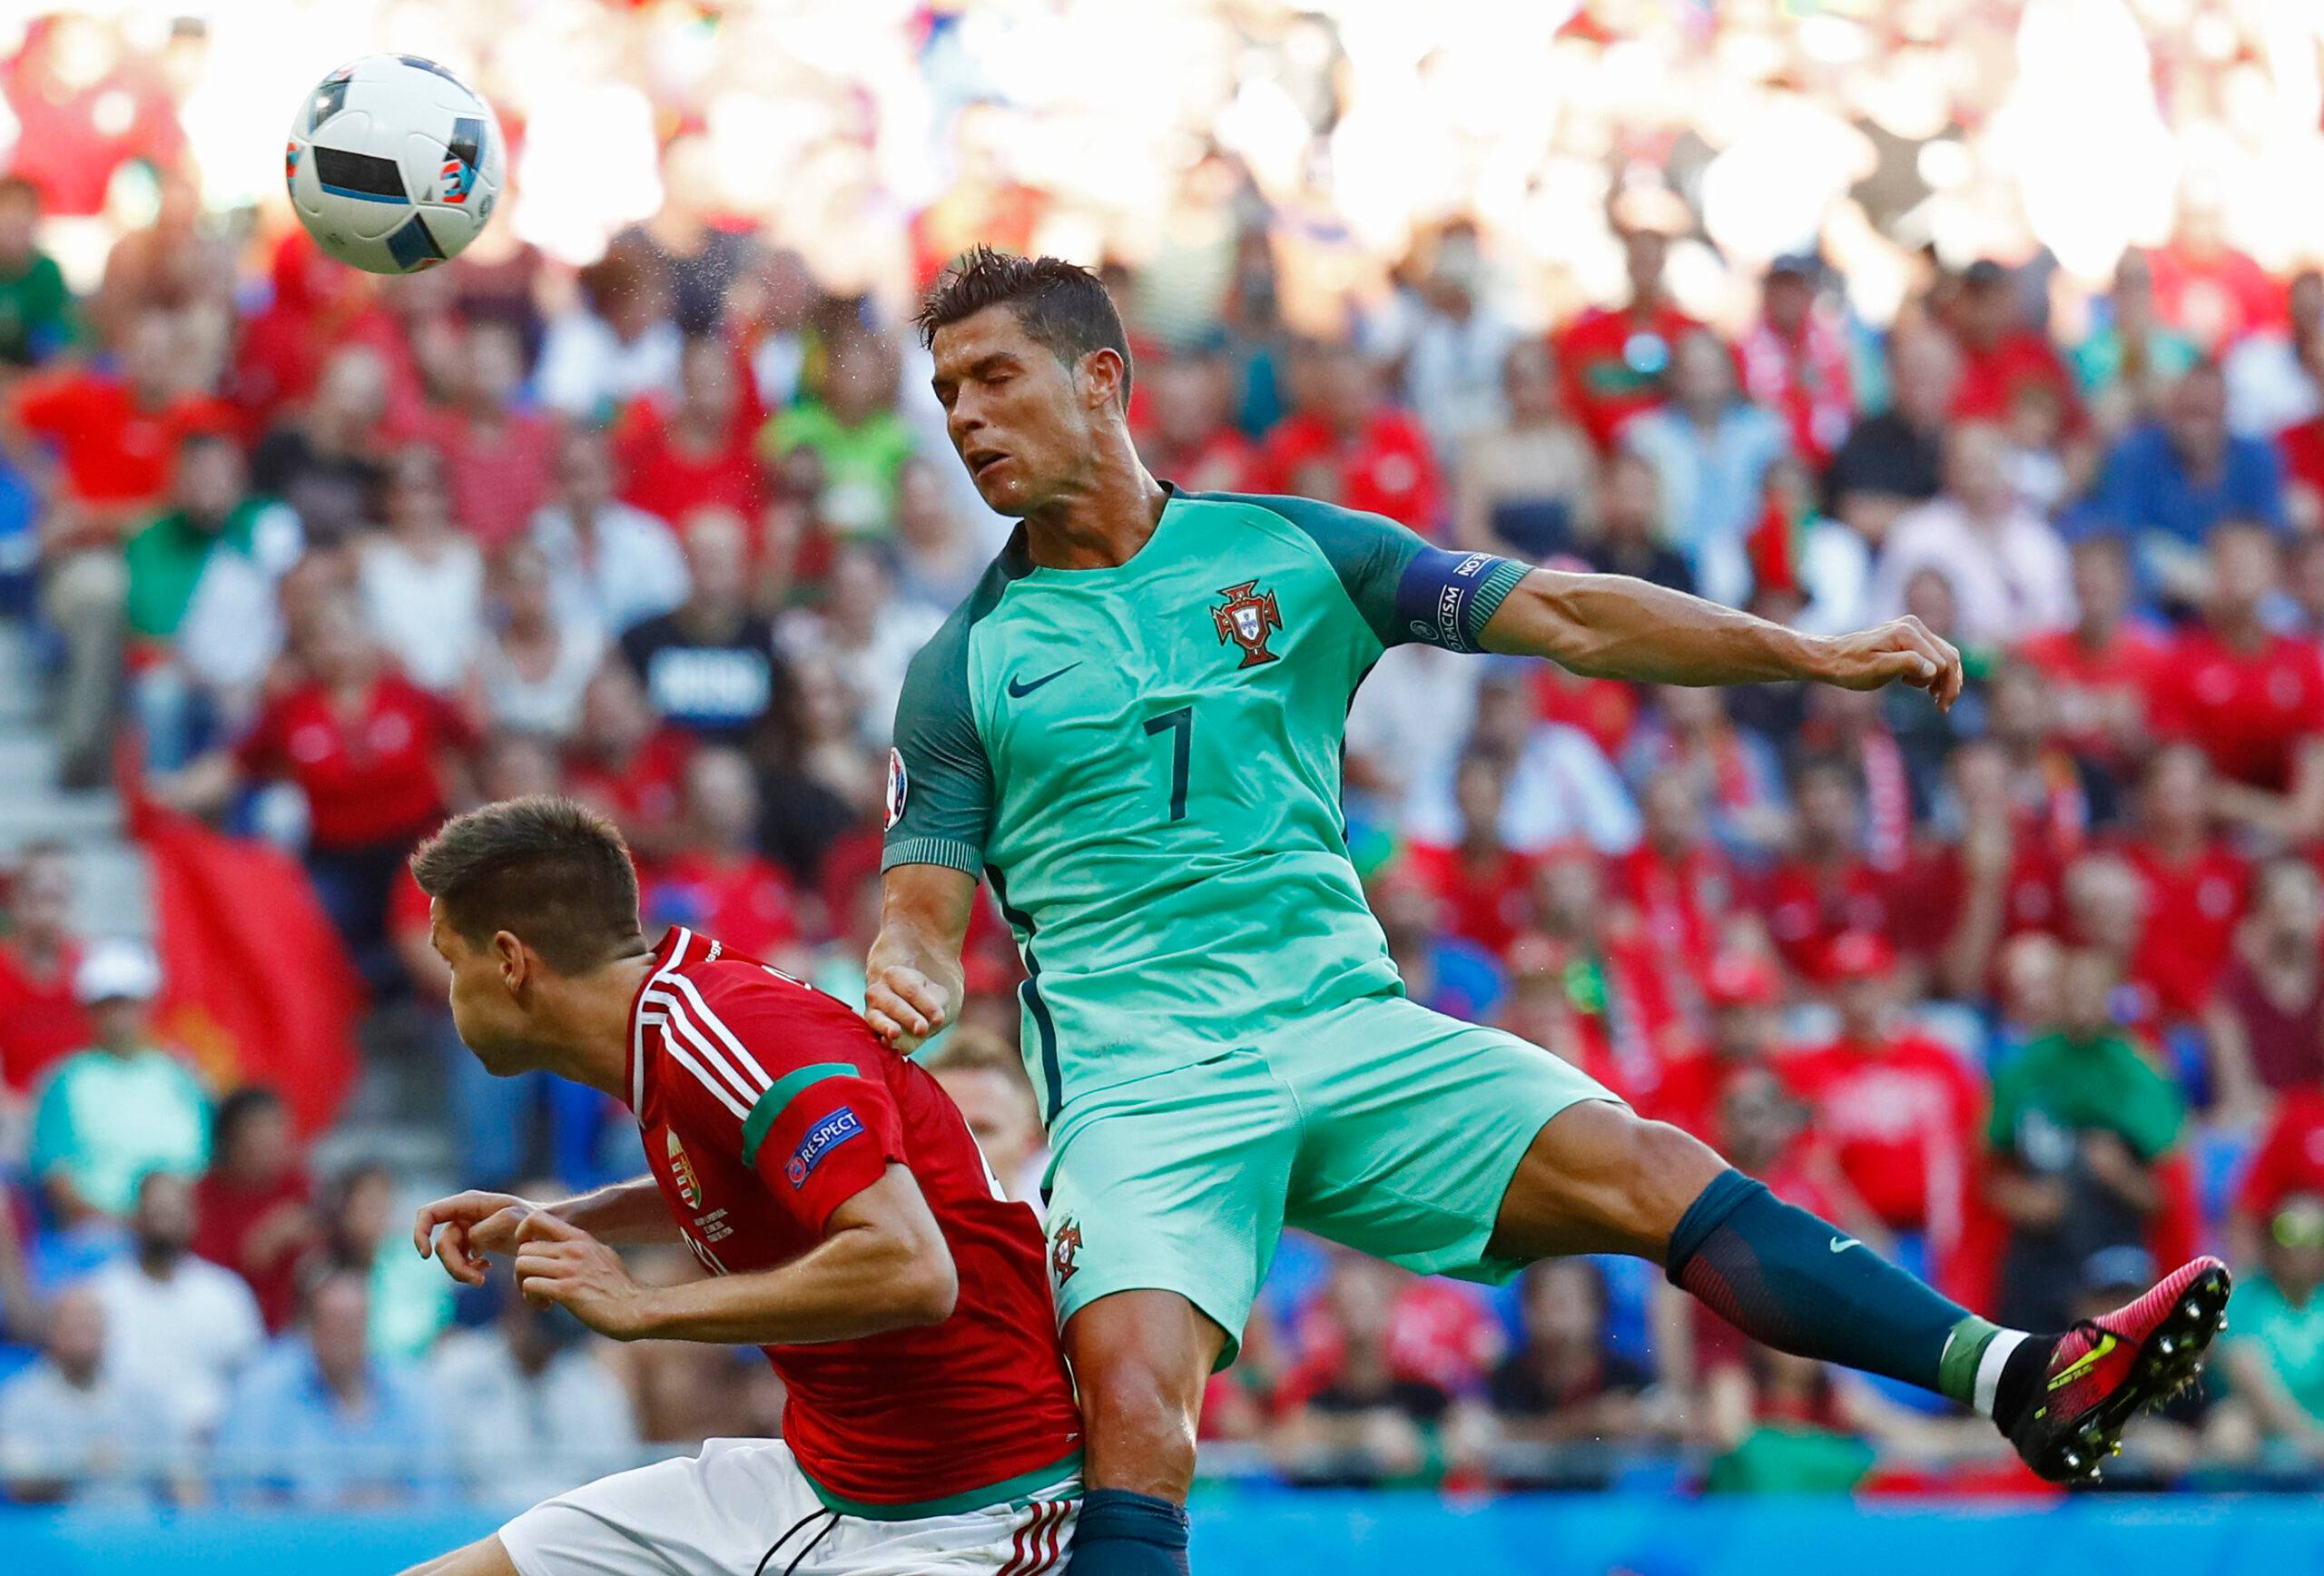 Ronaldo heads the ball.